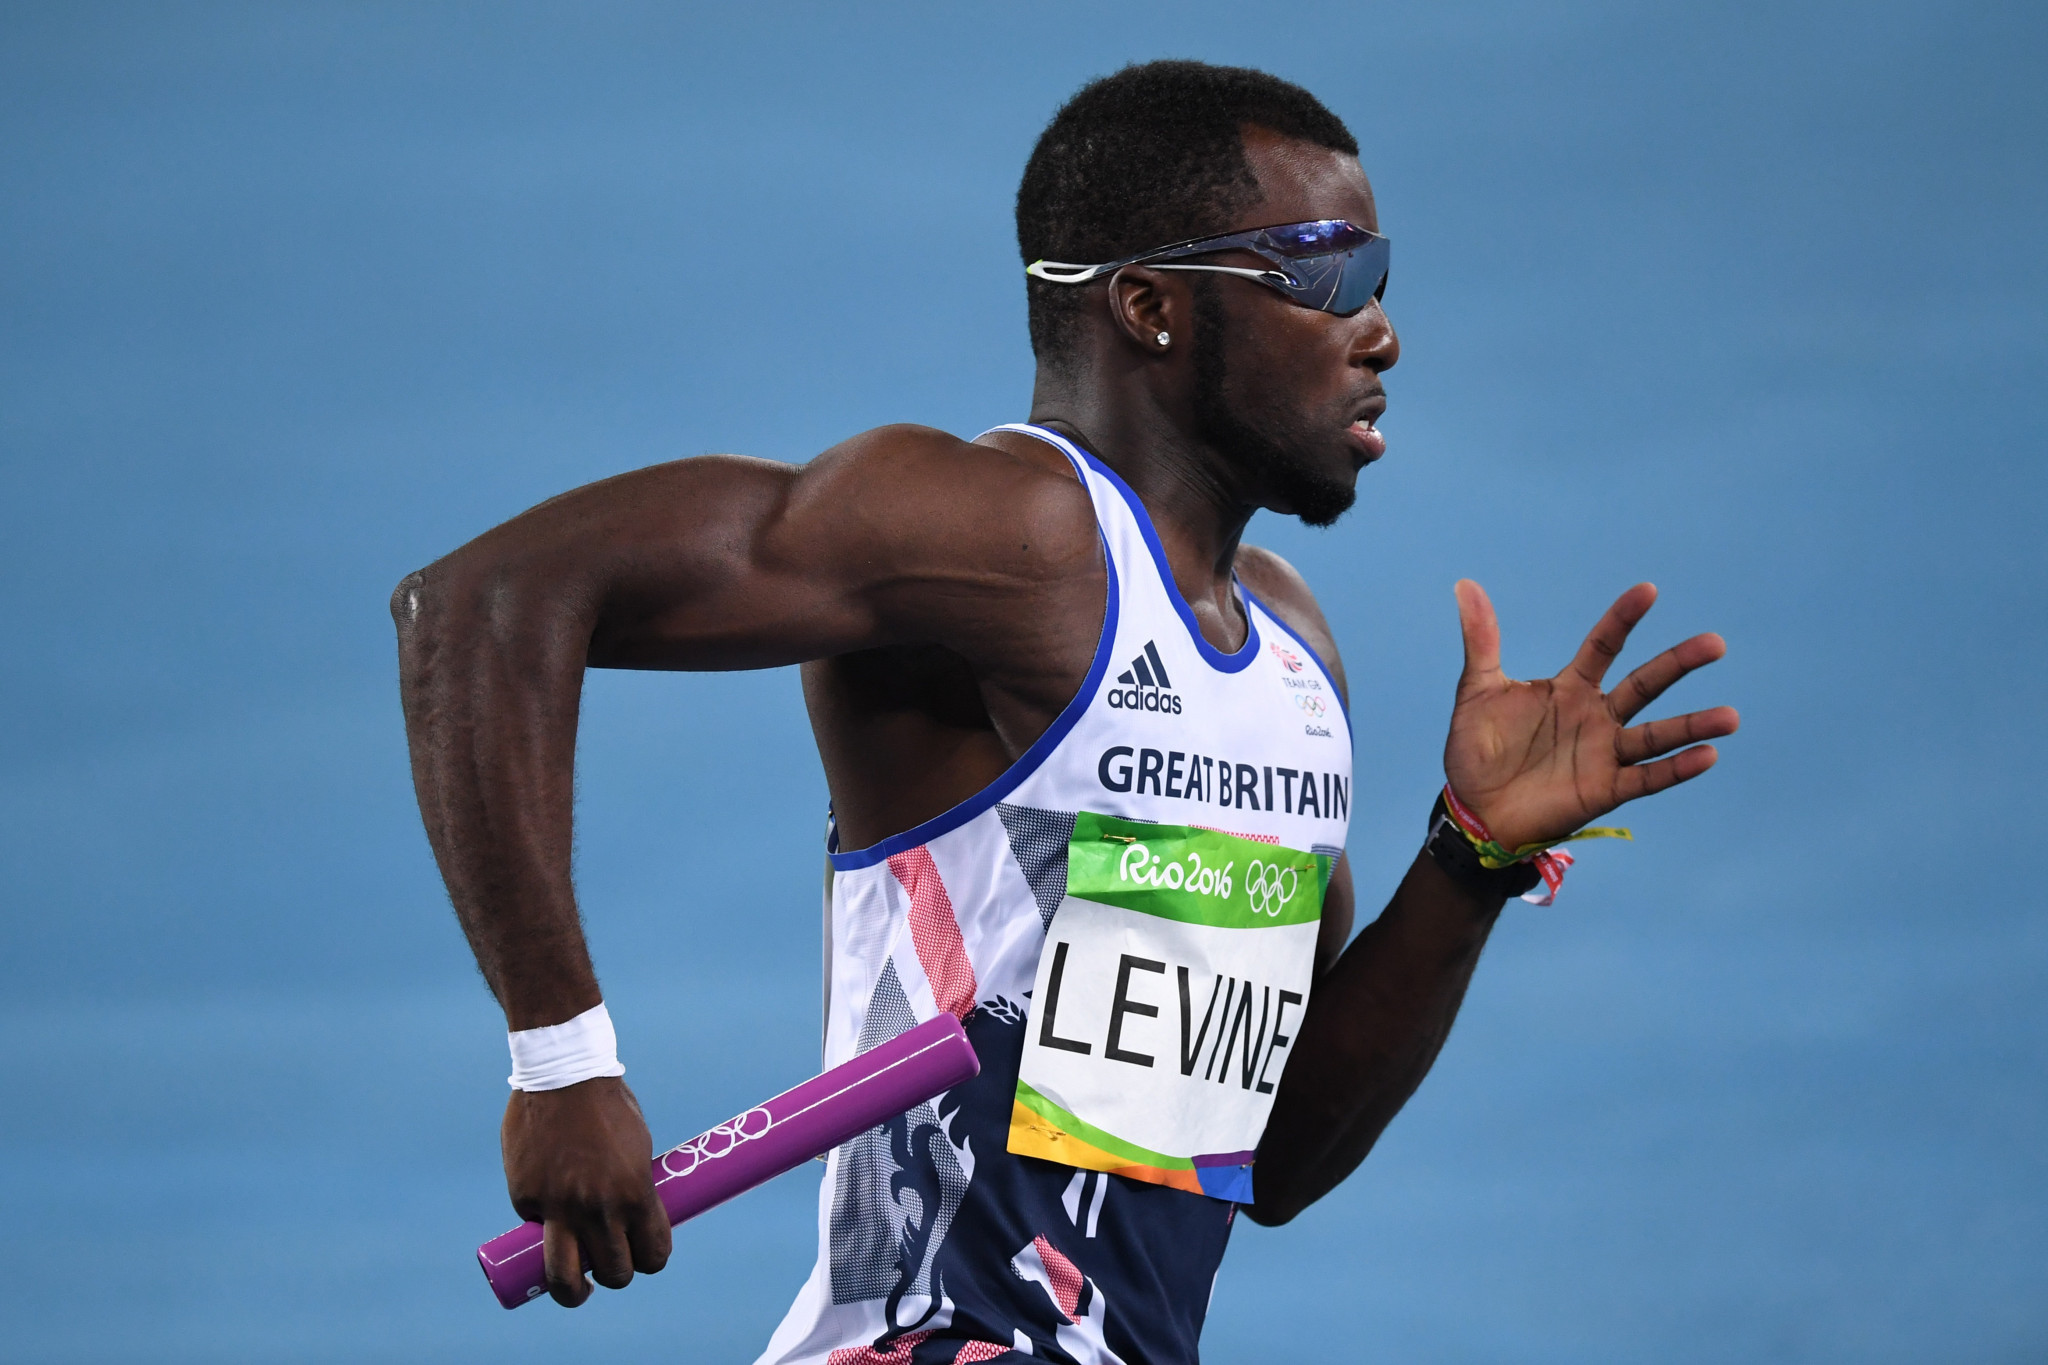 British sprinter Levine at centre of fresh doping allegations to hit athletics